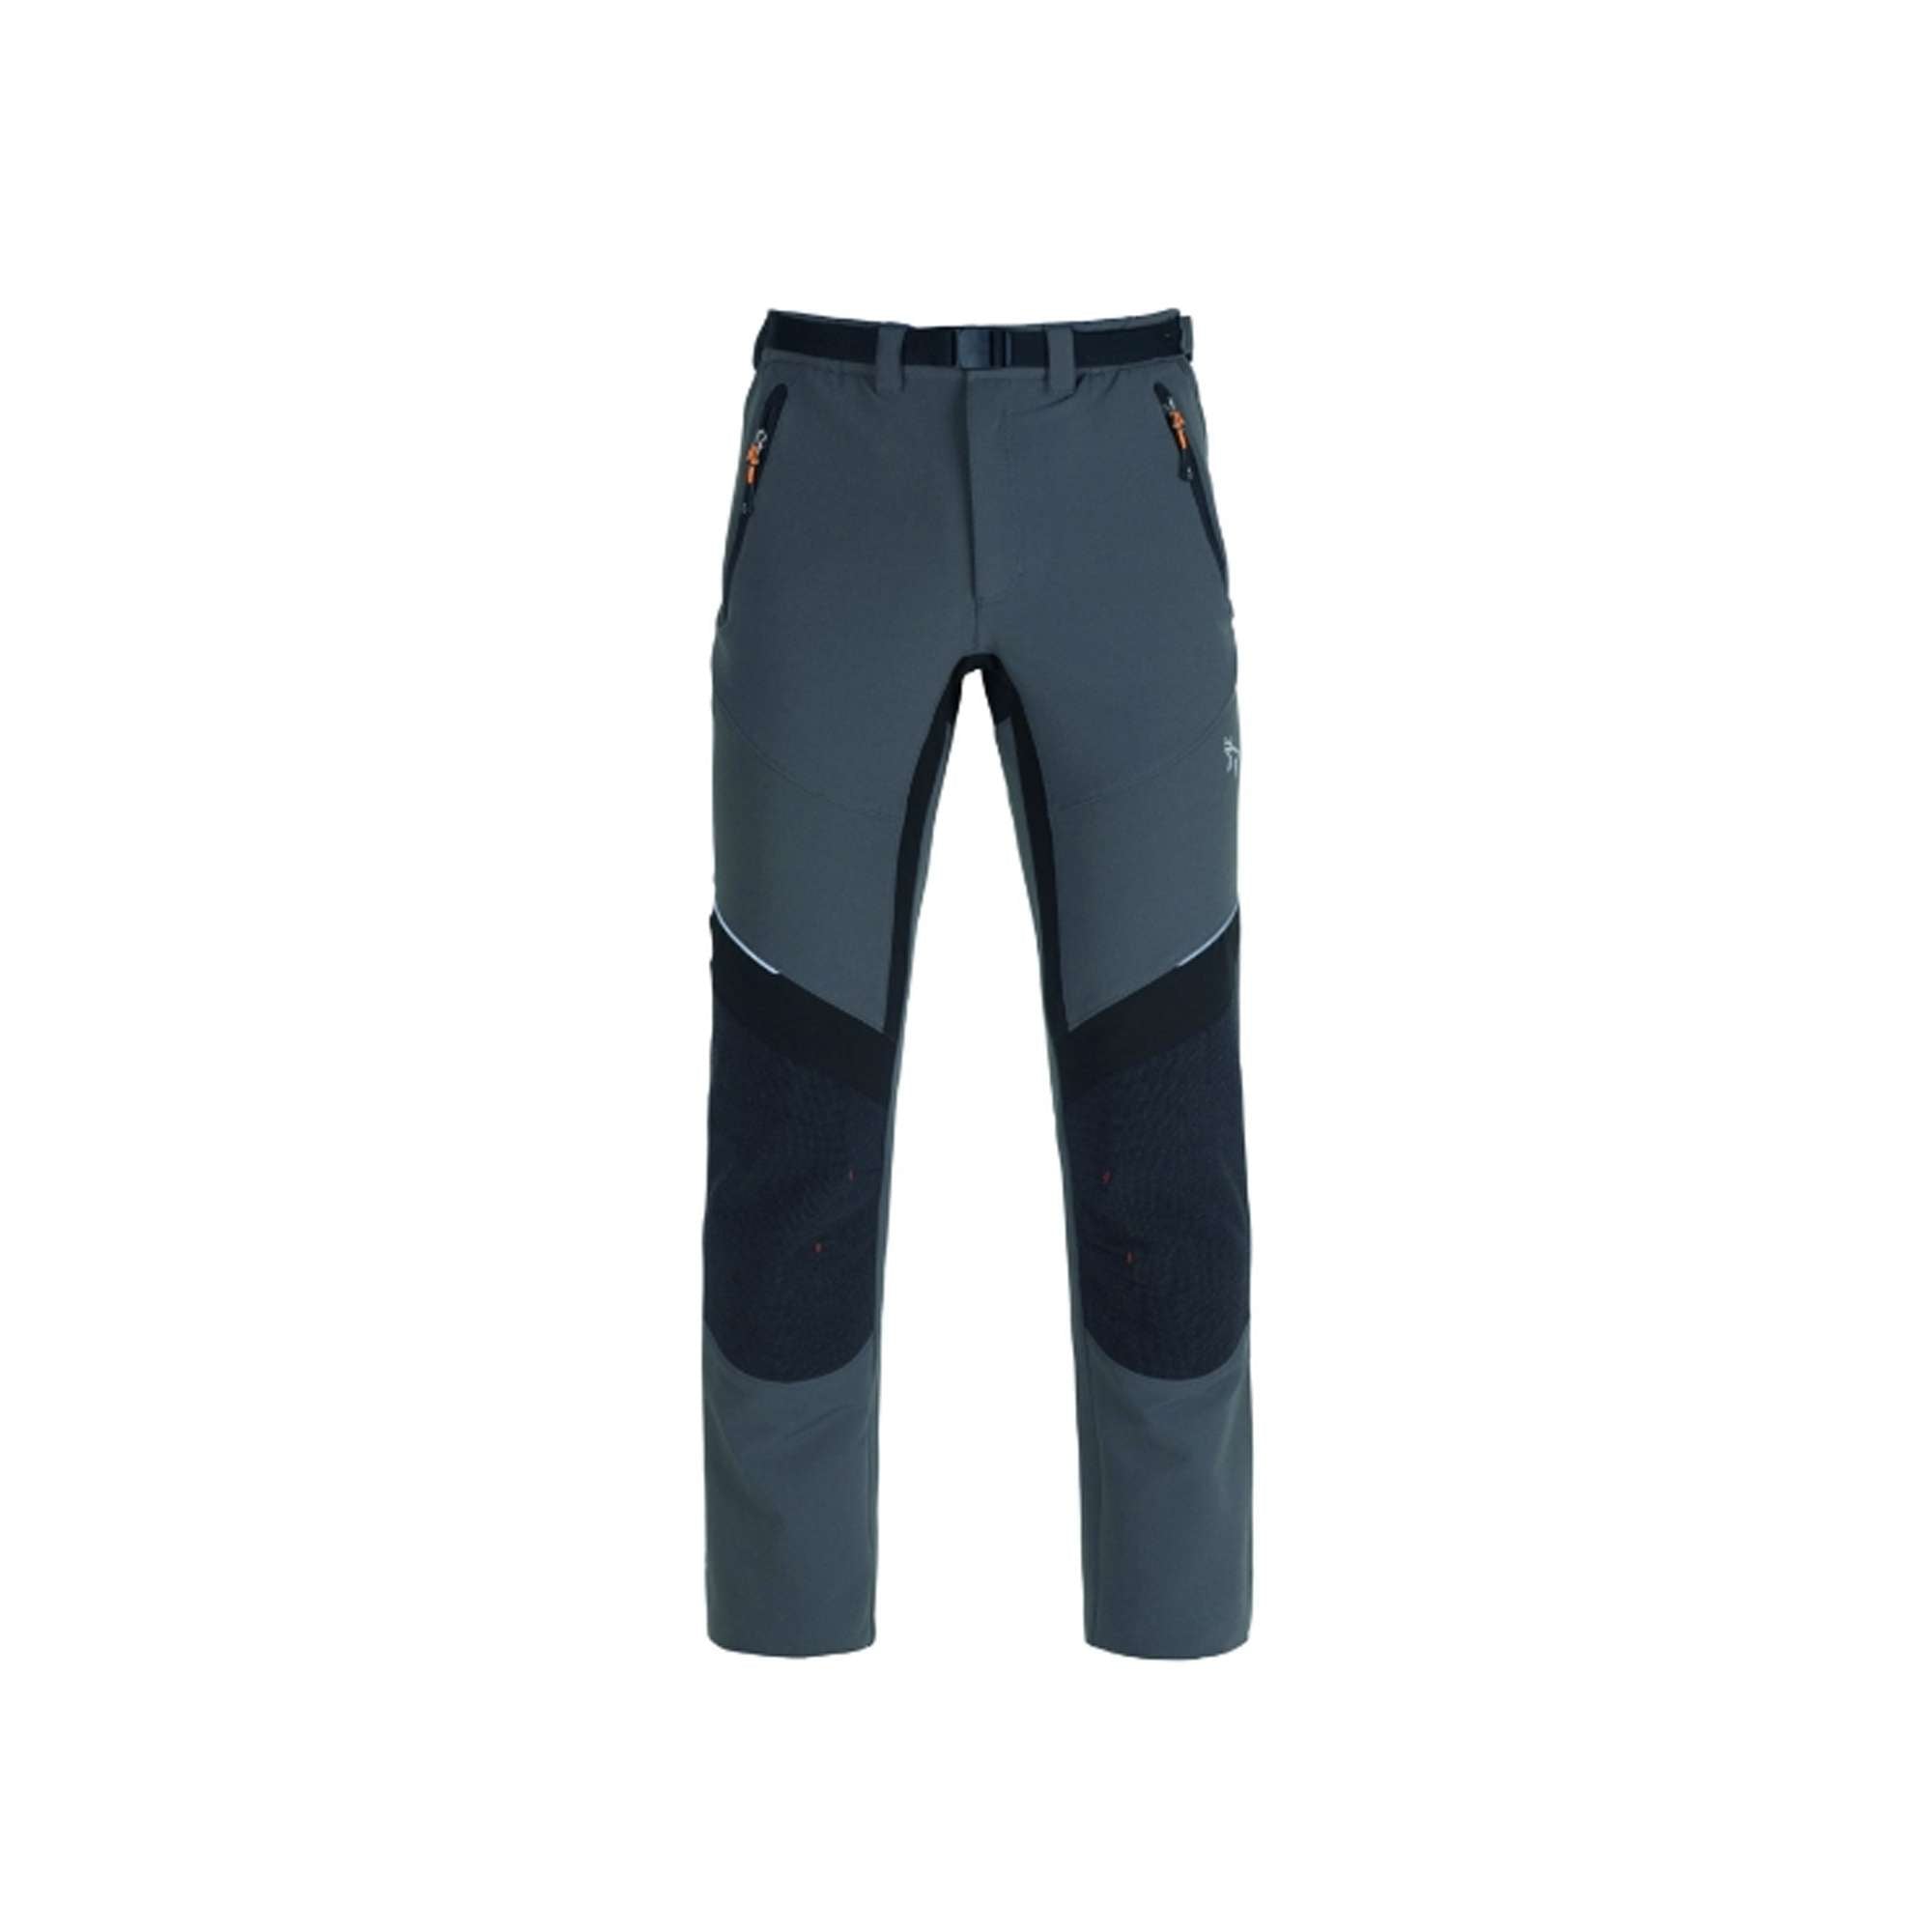 Stretchy work pants, Air force Blue/Black color, 54% Nylon 39% Polyester 7% Kapriol